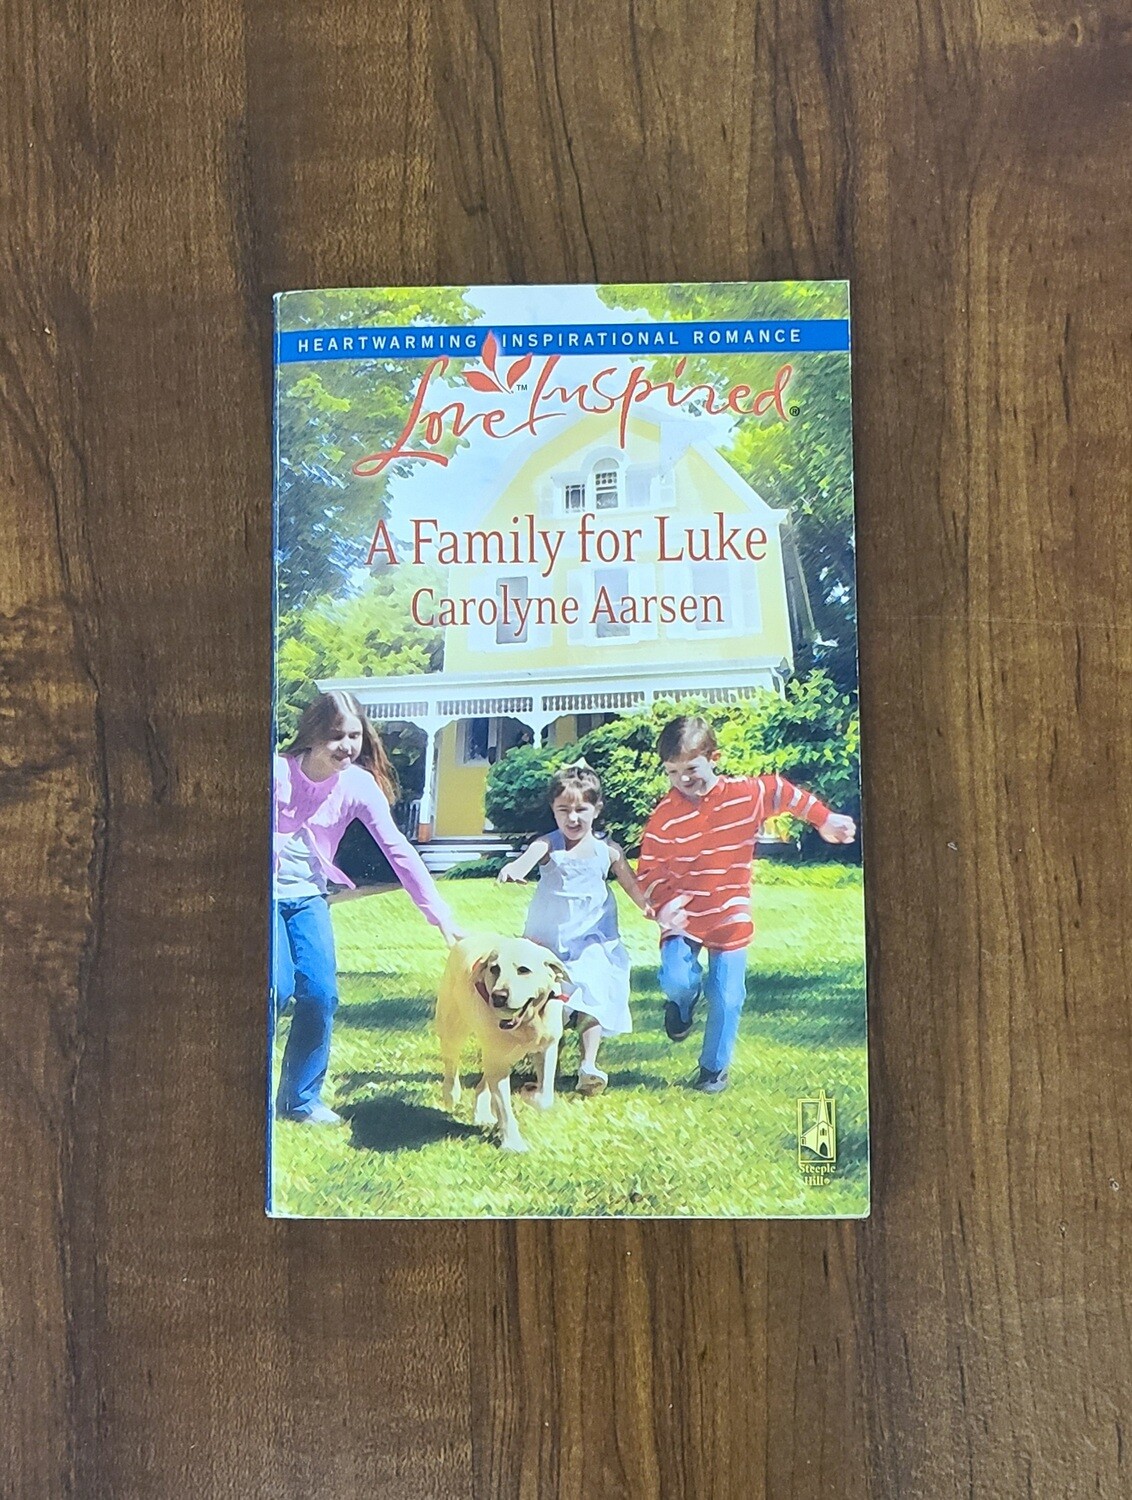 A Family for Luke by Carolyne Aarsen